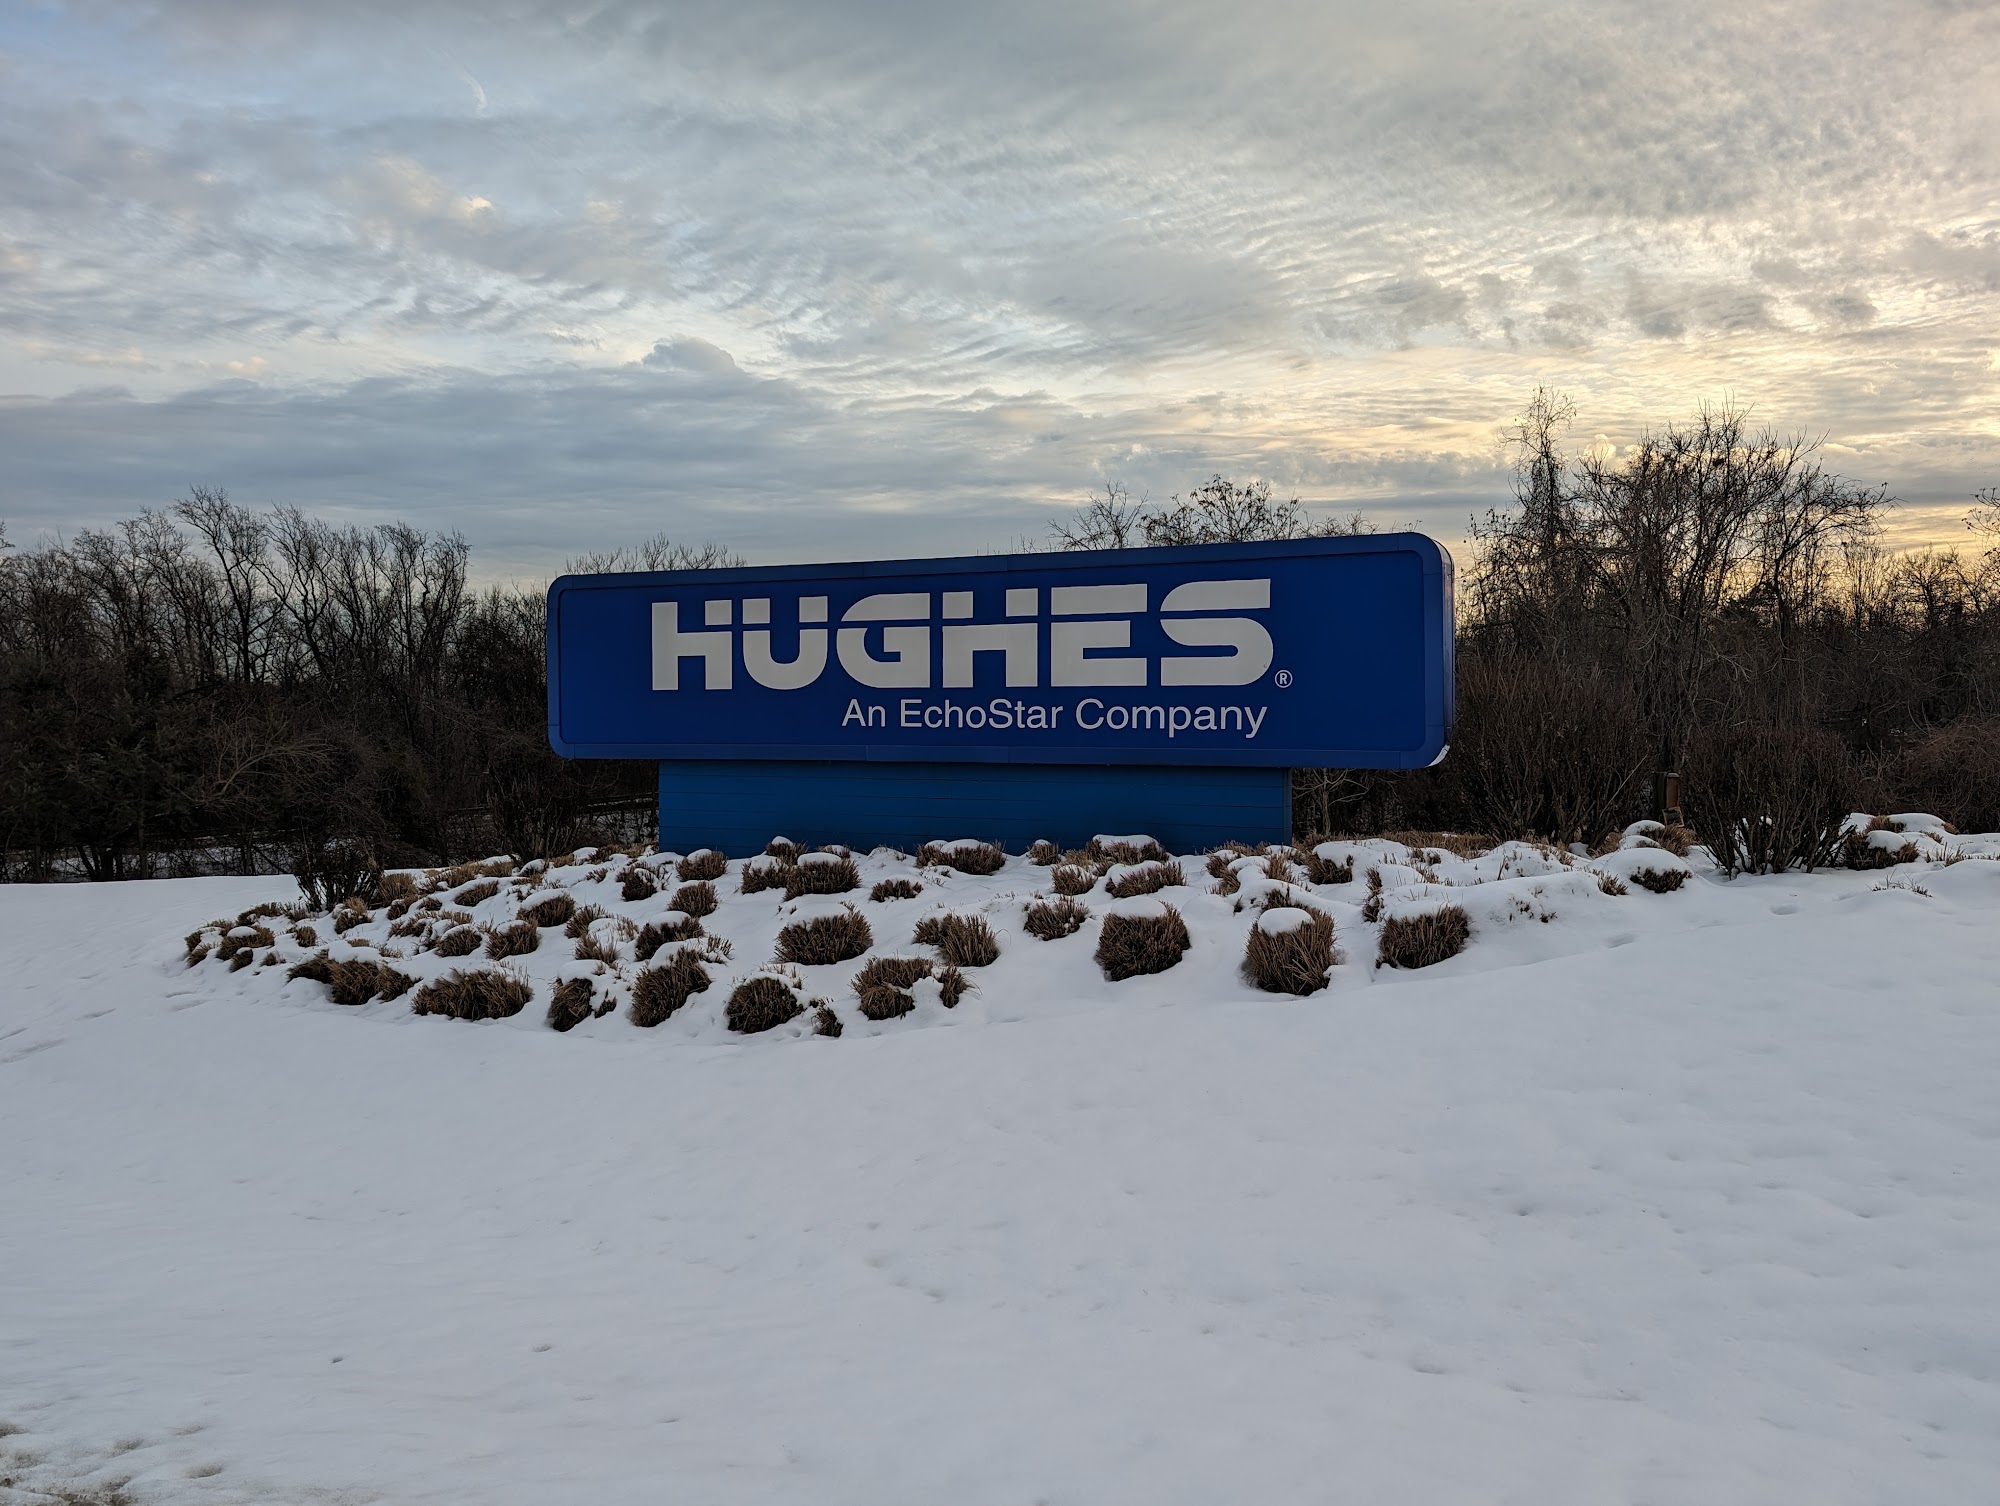 Hughes Network Systems, LLC